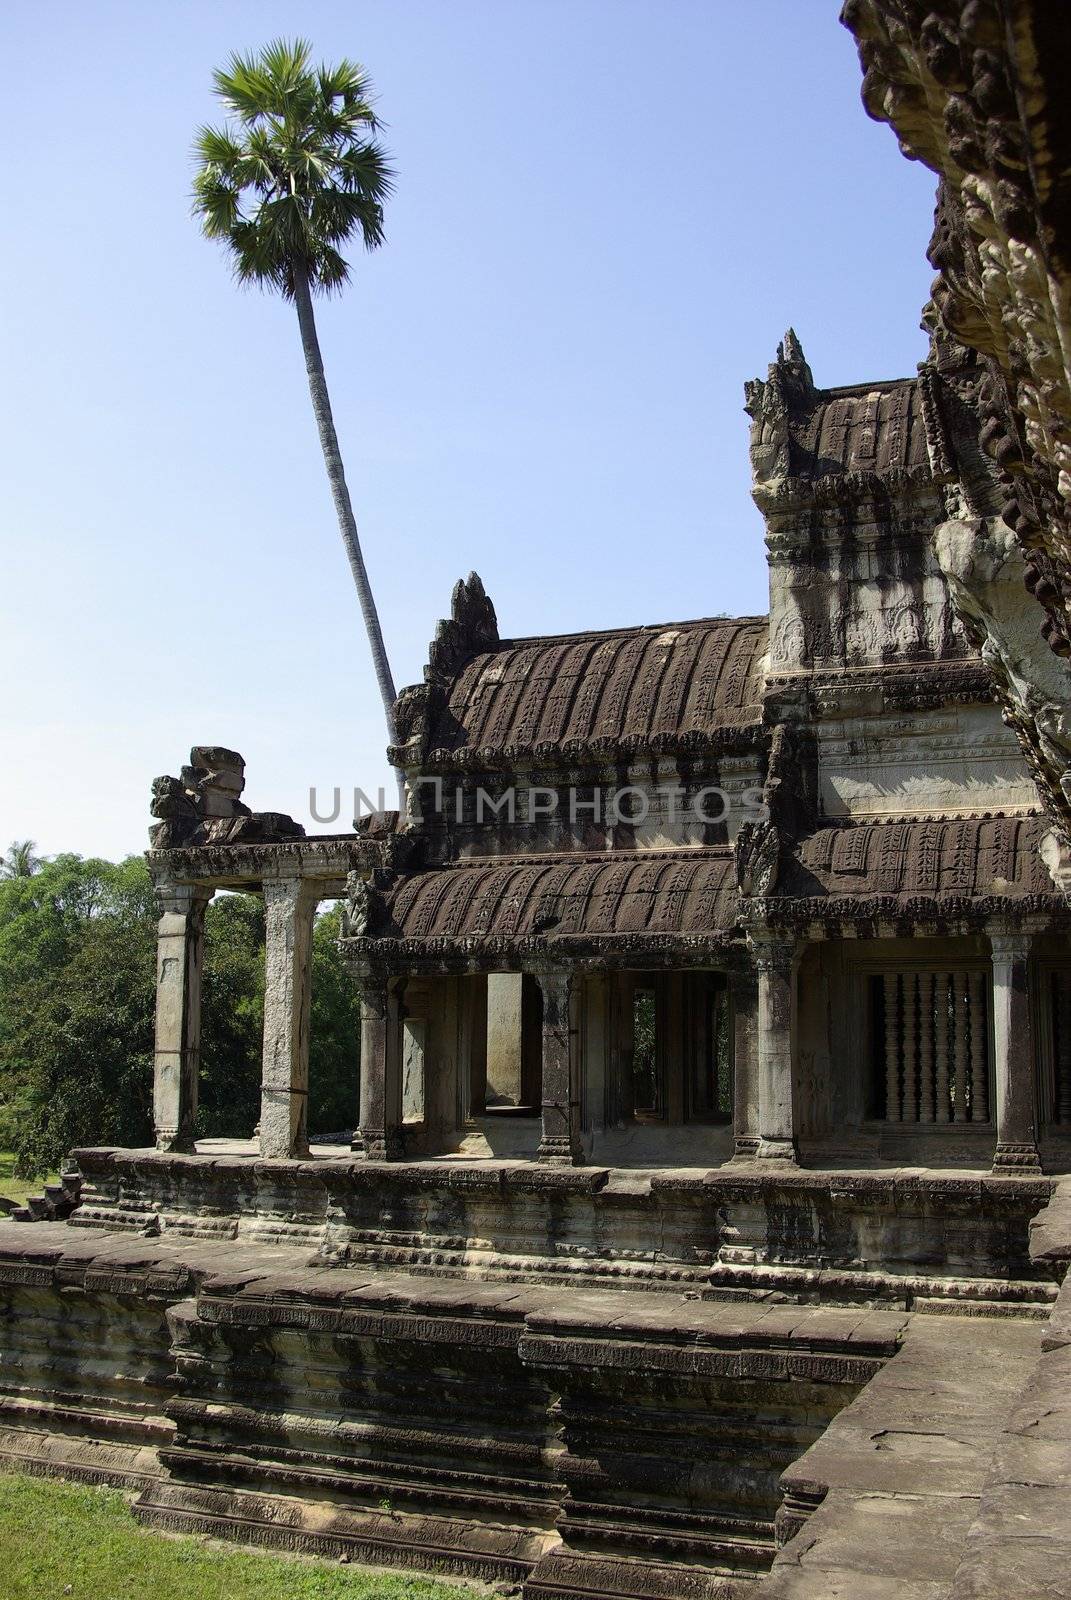 Unusual part of Angkor Wat temple by shkyo30